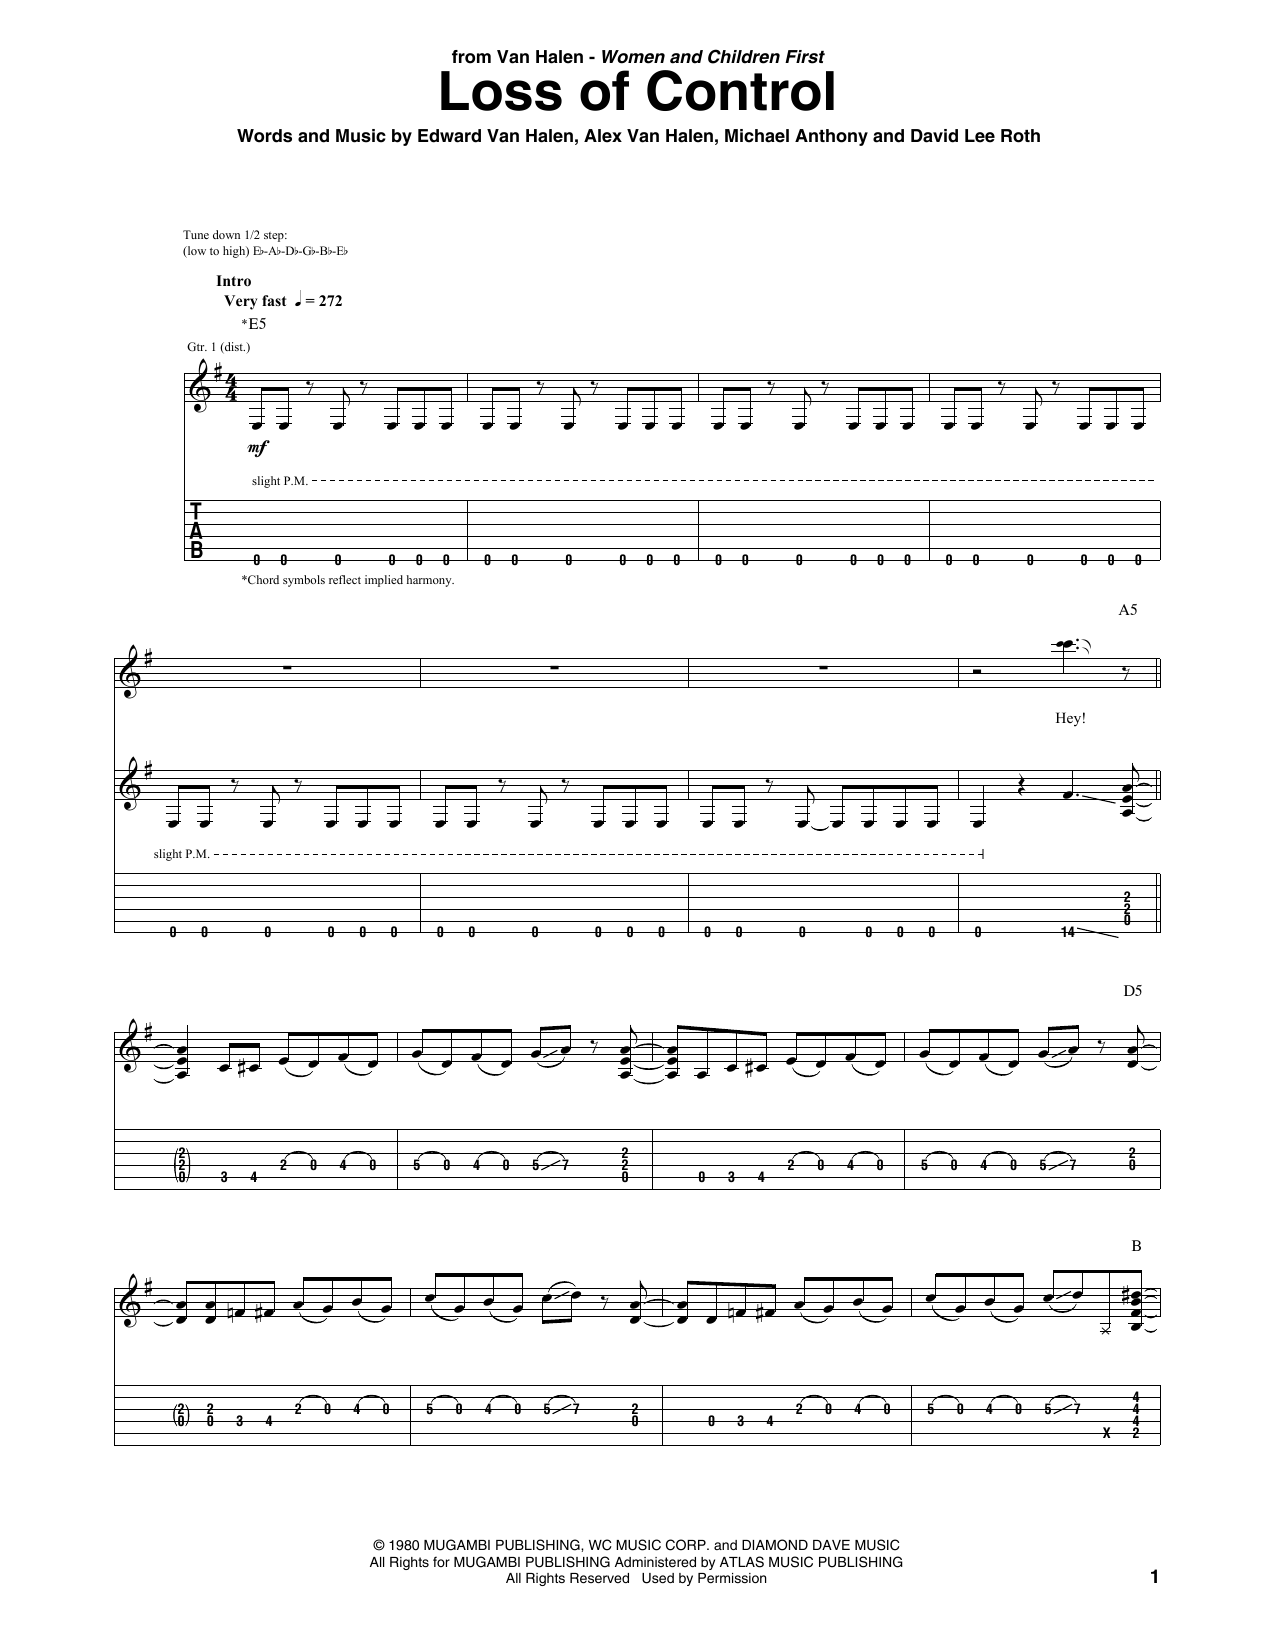 Van Halen Loss Of Control Sheet Music Notes & Chords for Guitar Tab - Download or Print PDF